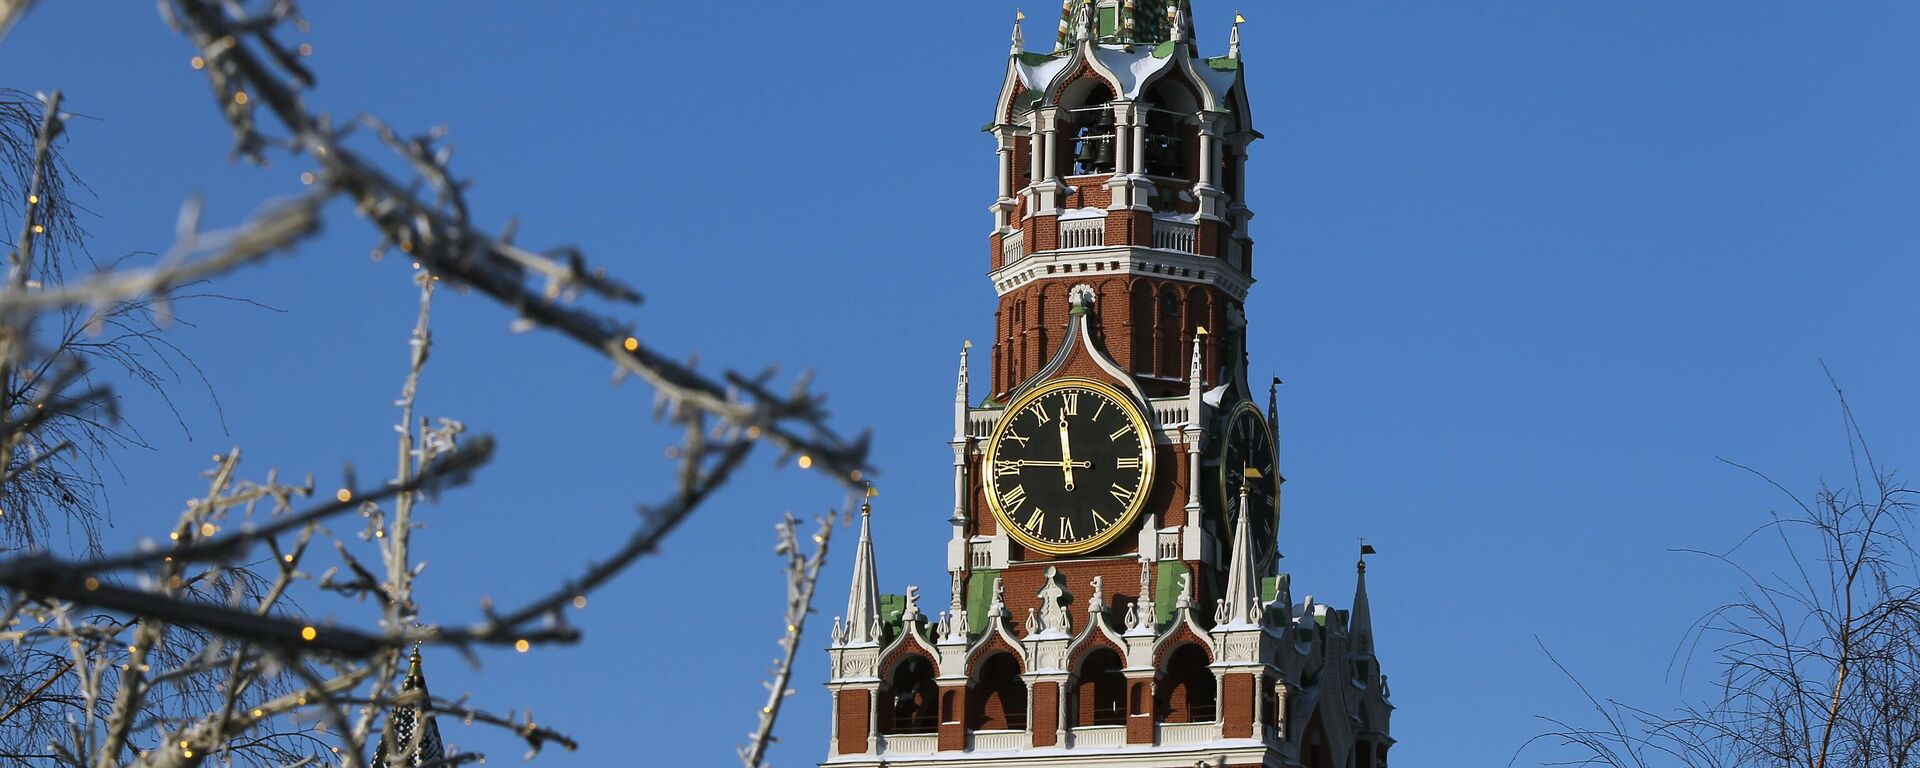 Tháp Spasskaya của Điện Kremlin Moscow. - Sputnik Việt Nam, 1920, 09.04.2022